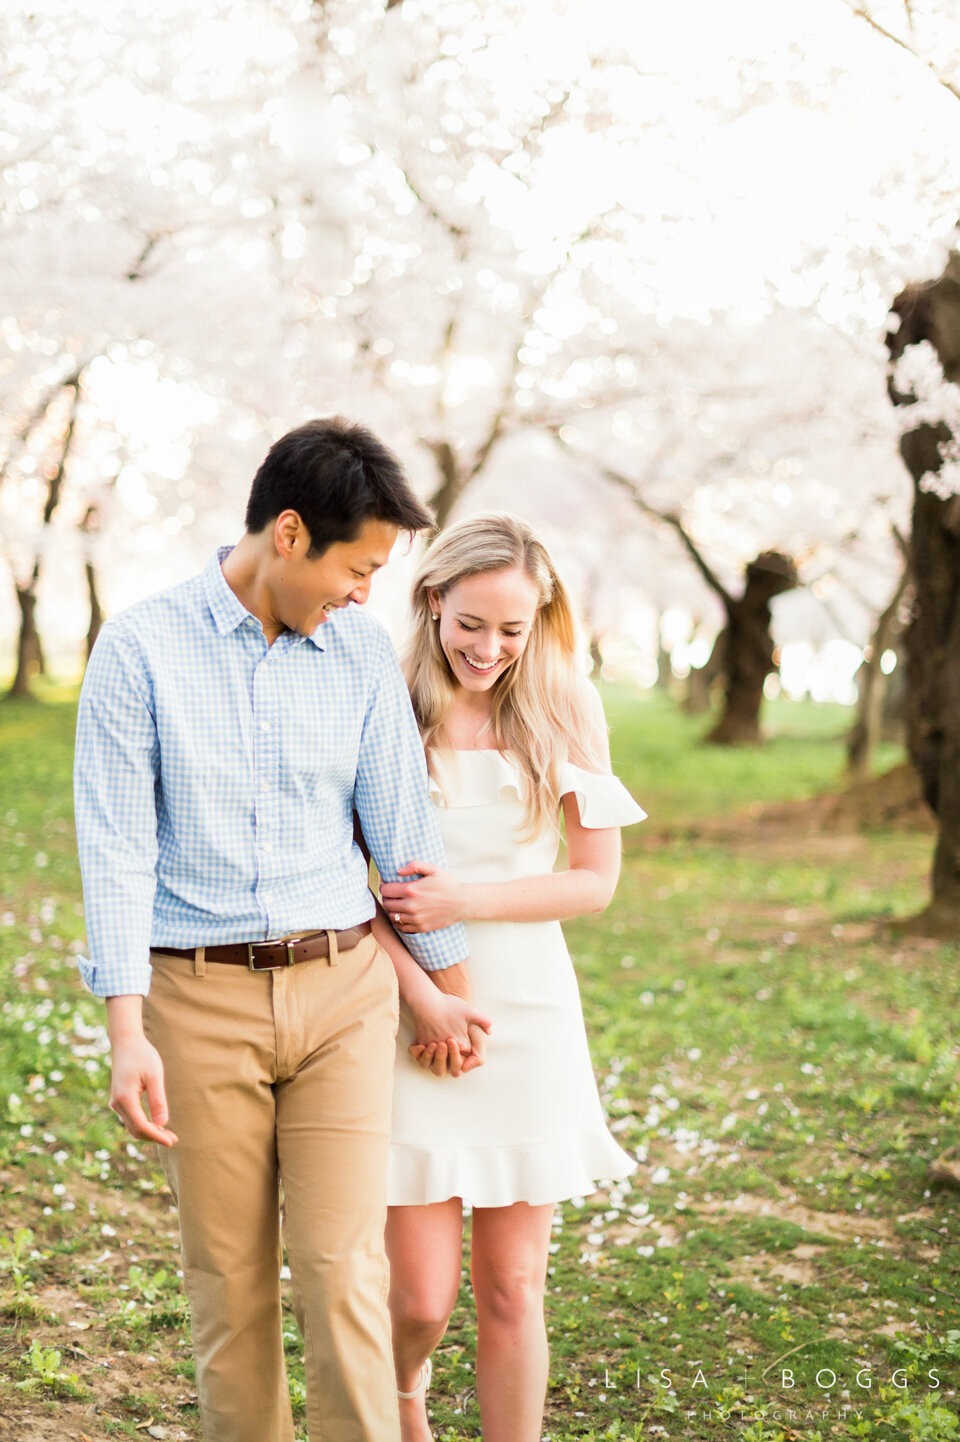 Jessica & Andrew’s DC Cherry Blossom Engagement Photos - Washi